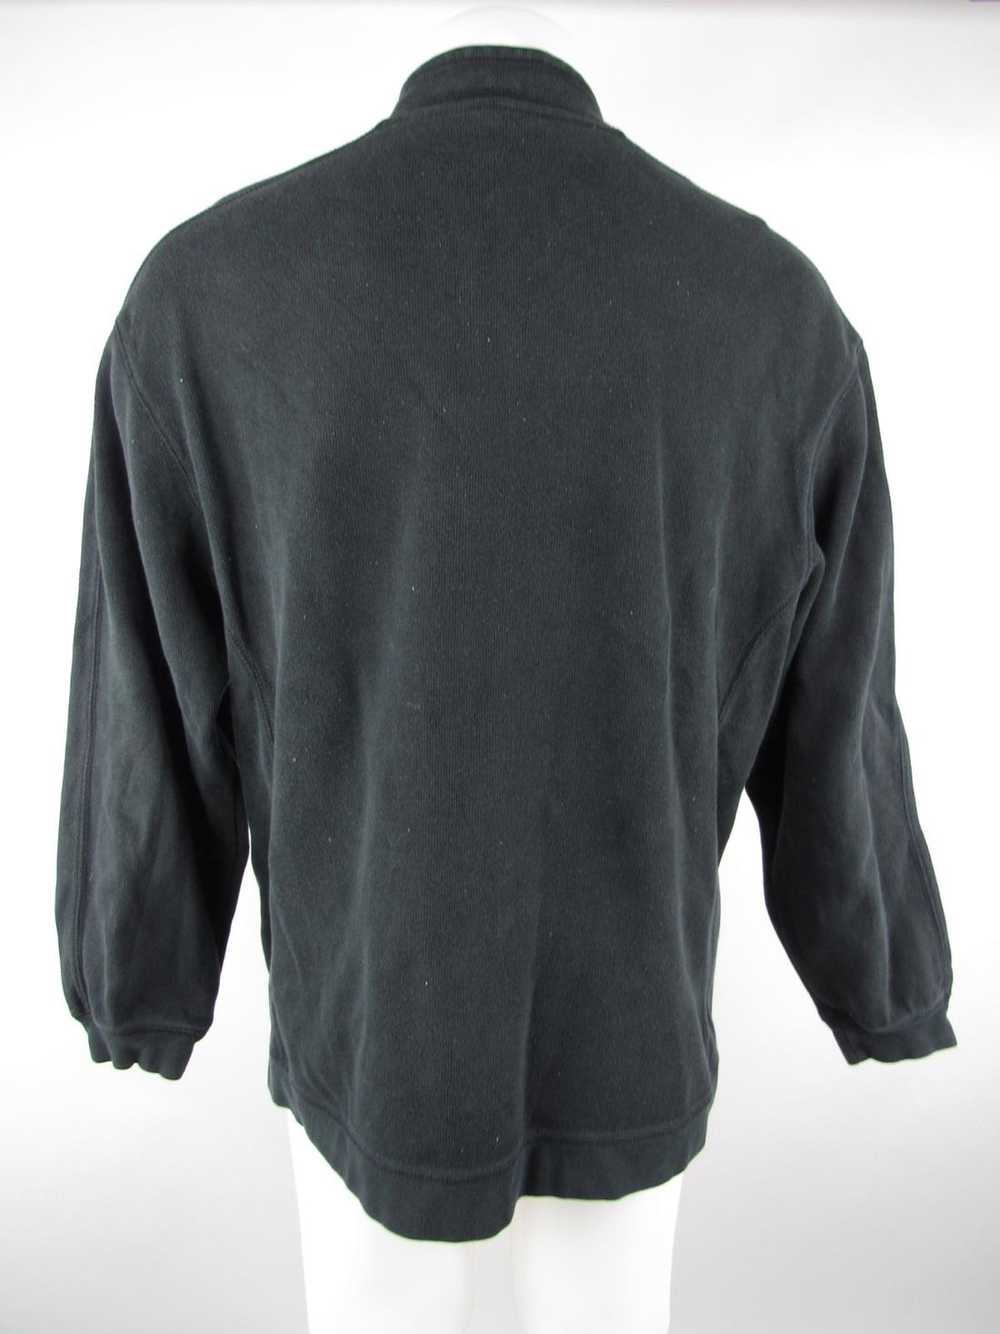 Geoffrey Beene Cardigan Sweater - image 2